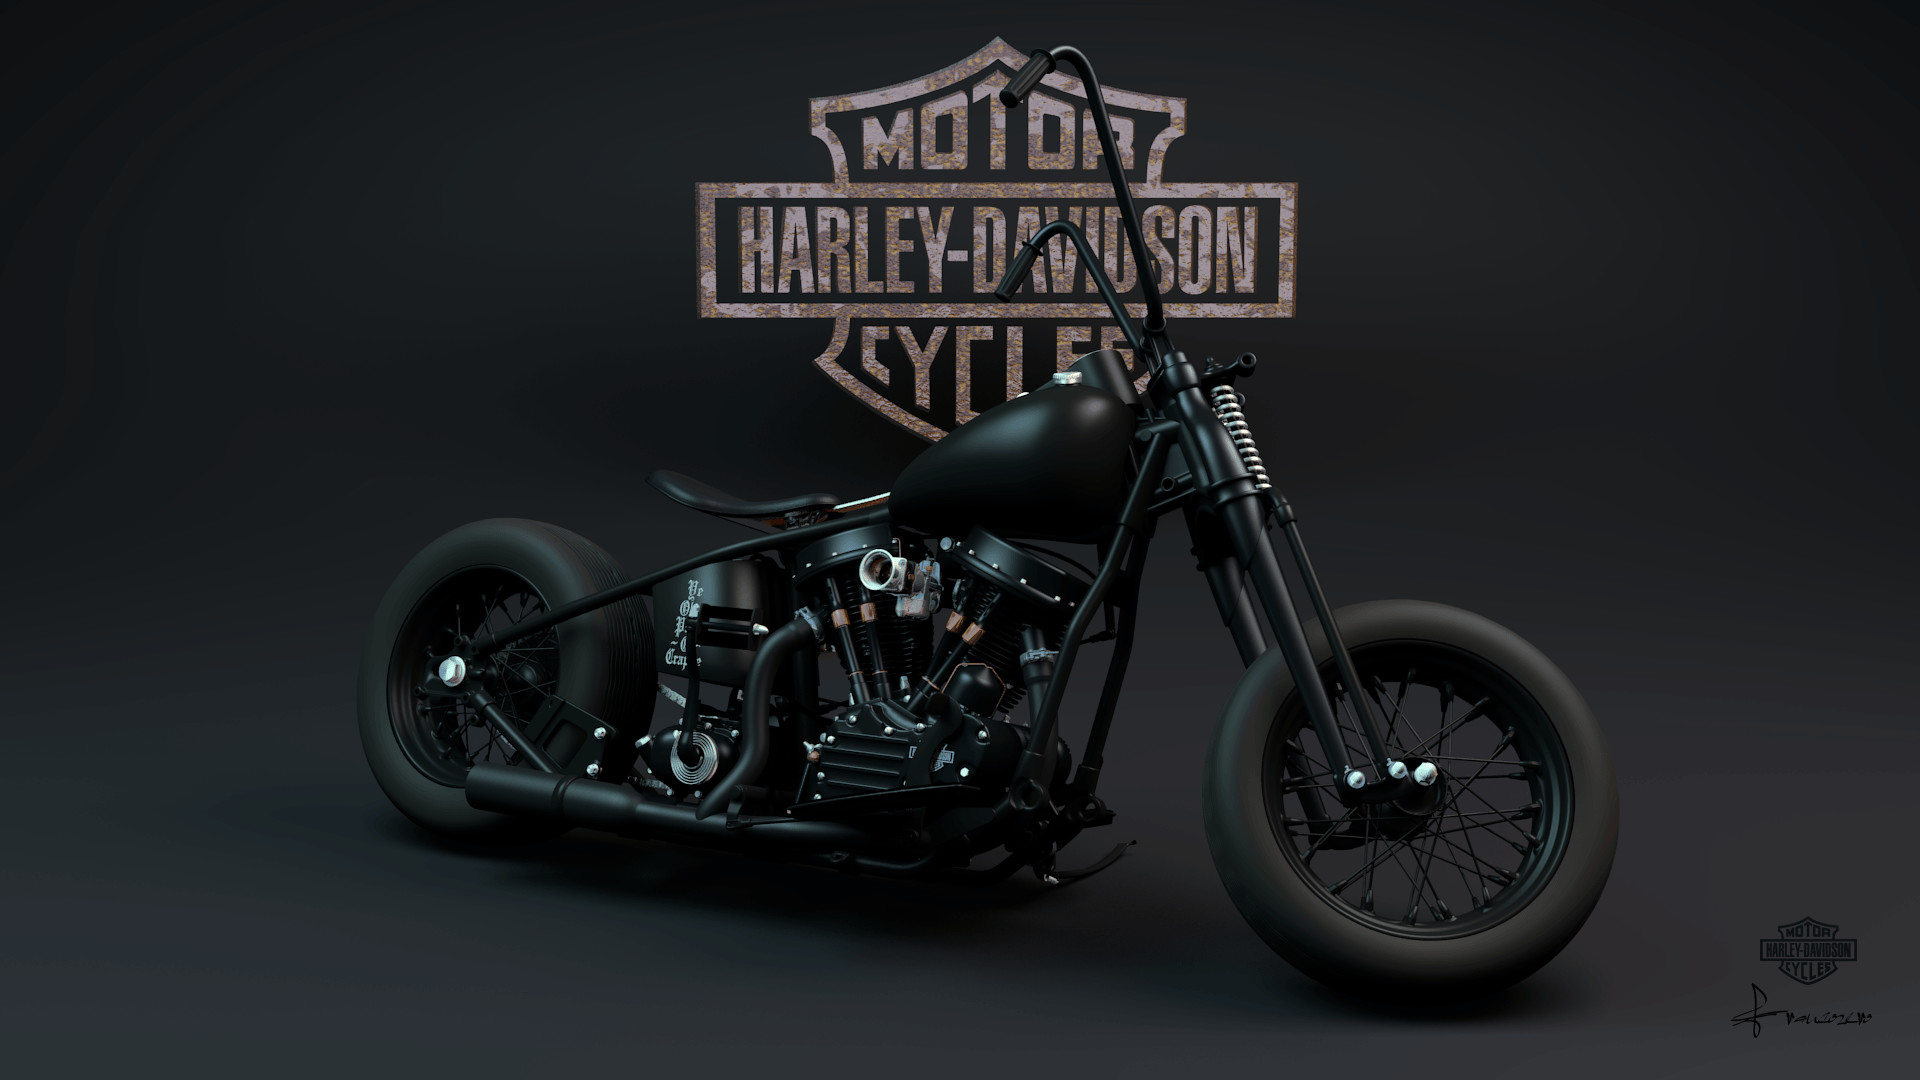 1920x1080 Bad Ass Harley Bobber Studio 022a by francozero on DeviantArt